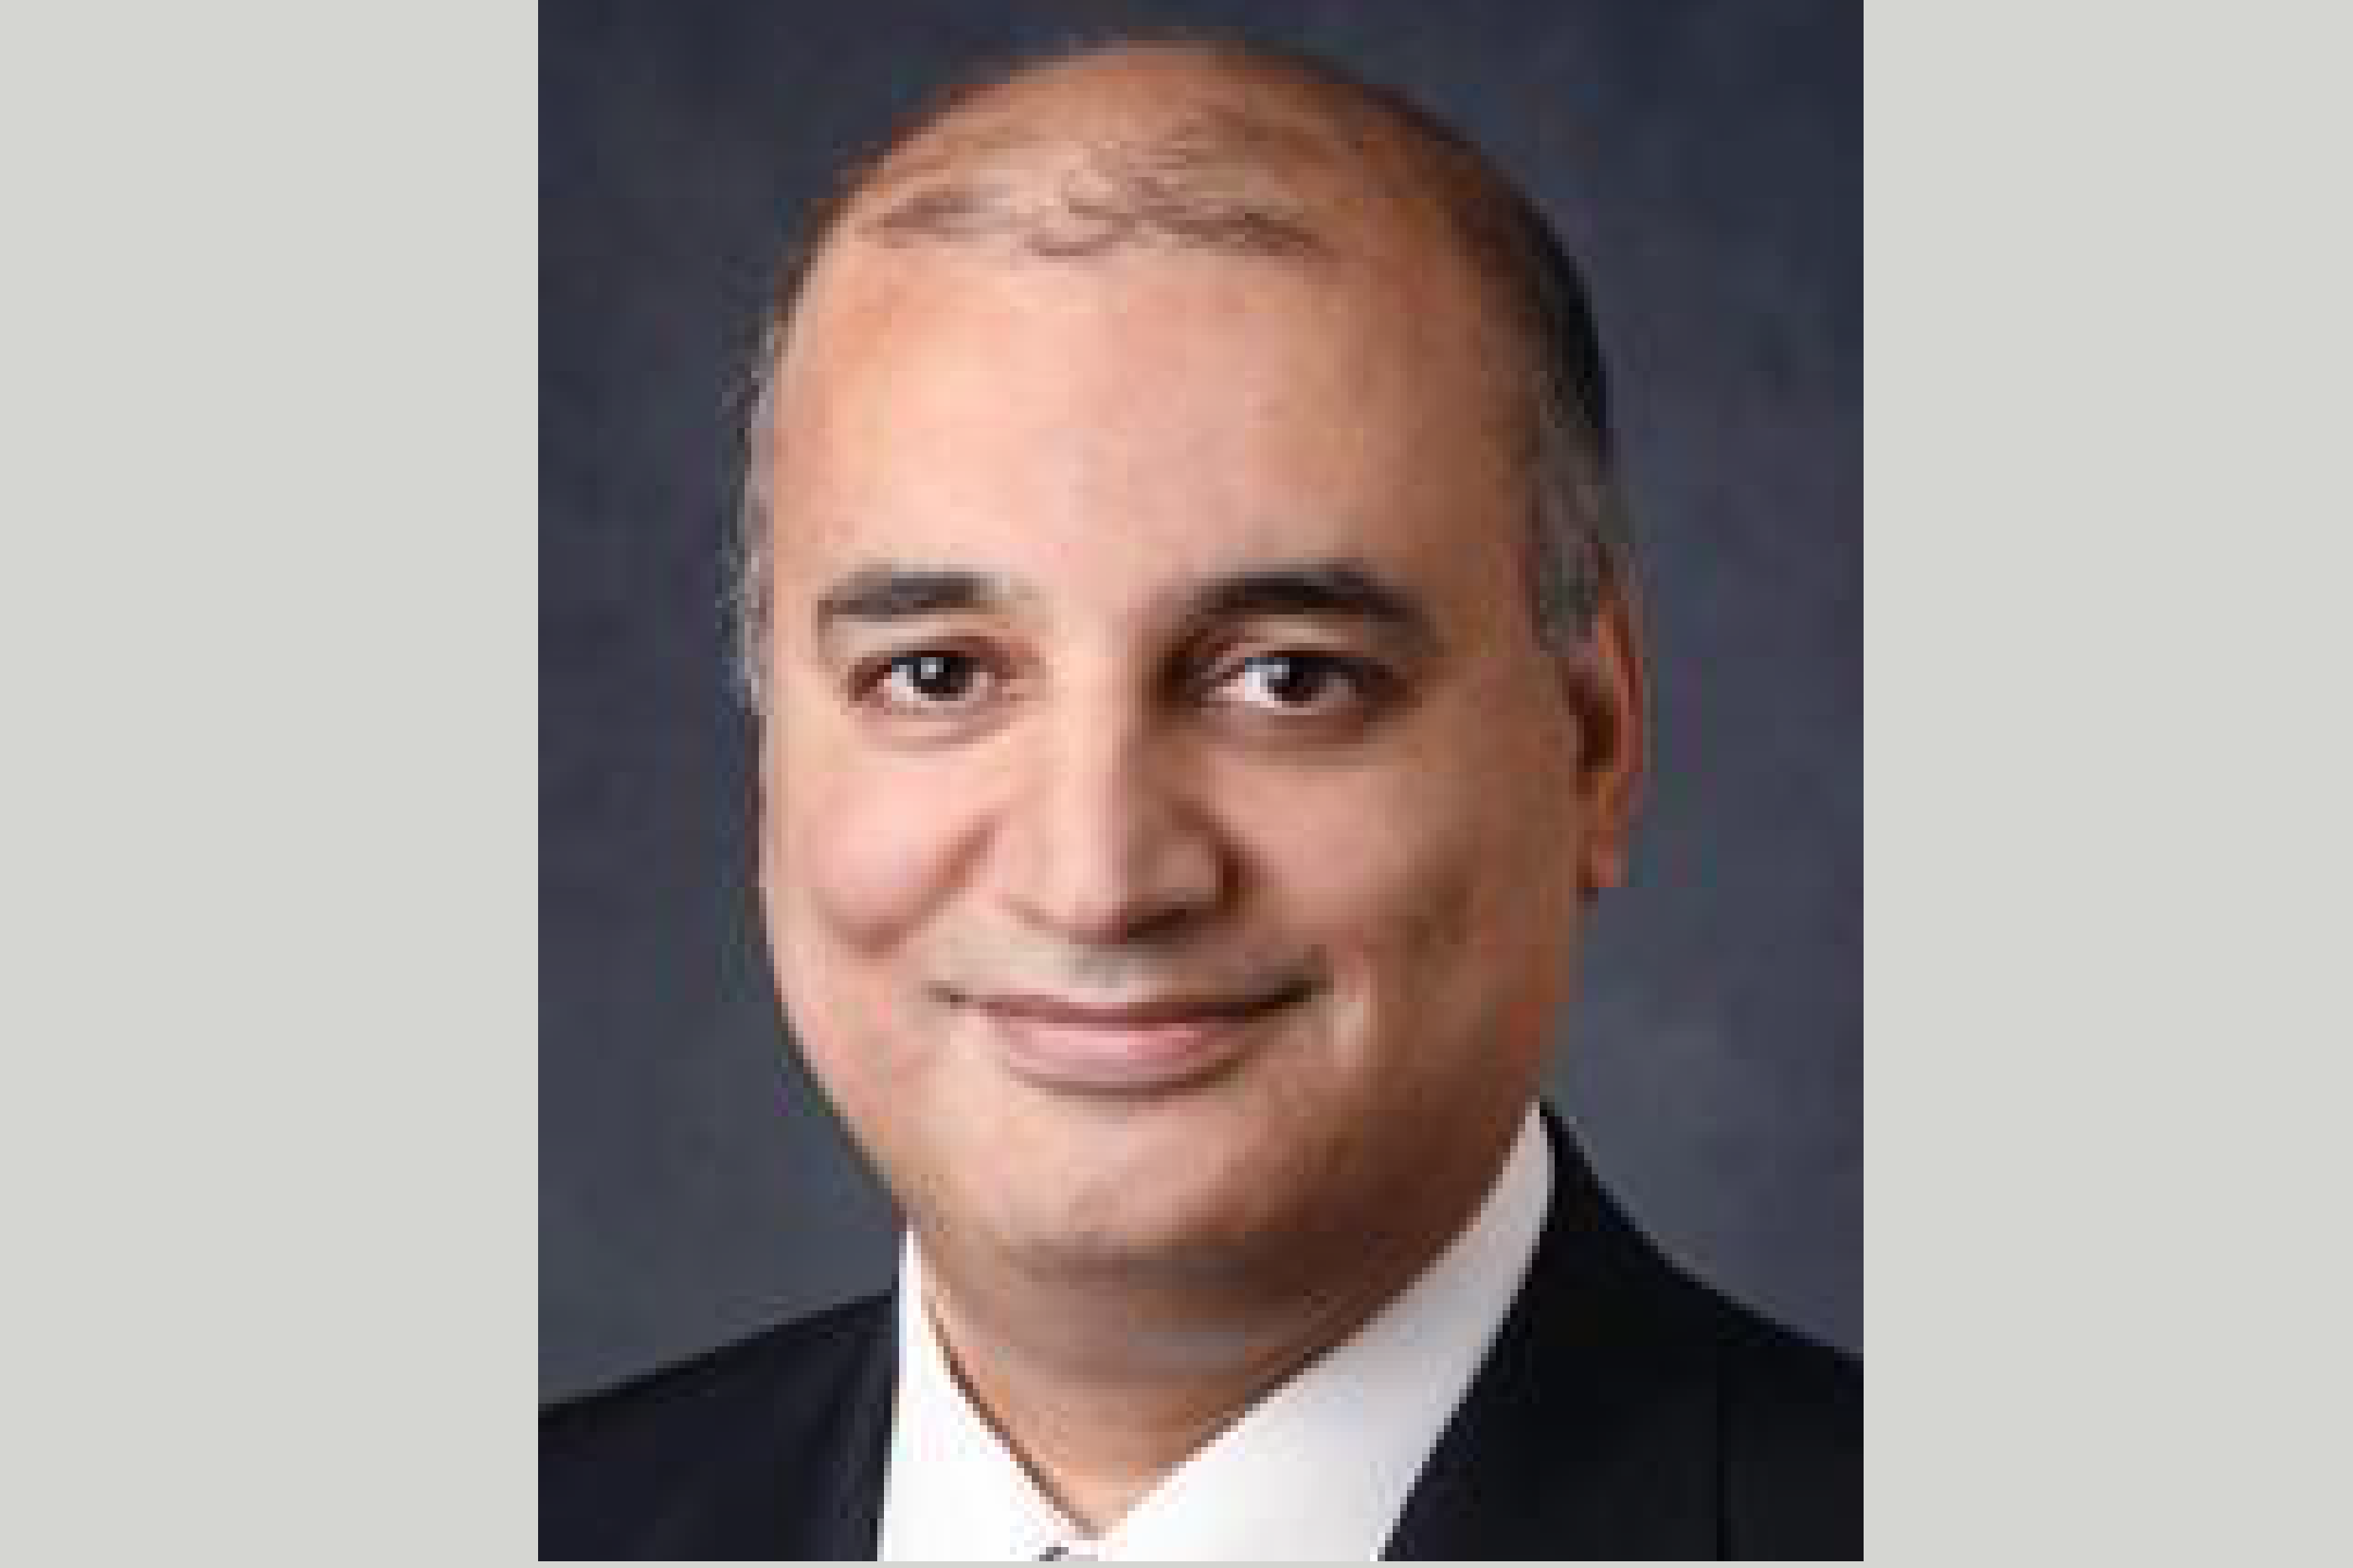 Dr. Jafar Golzarian